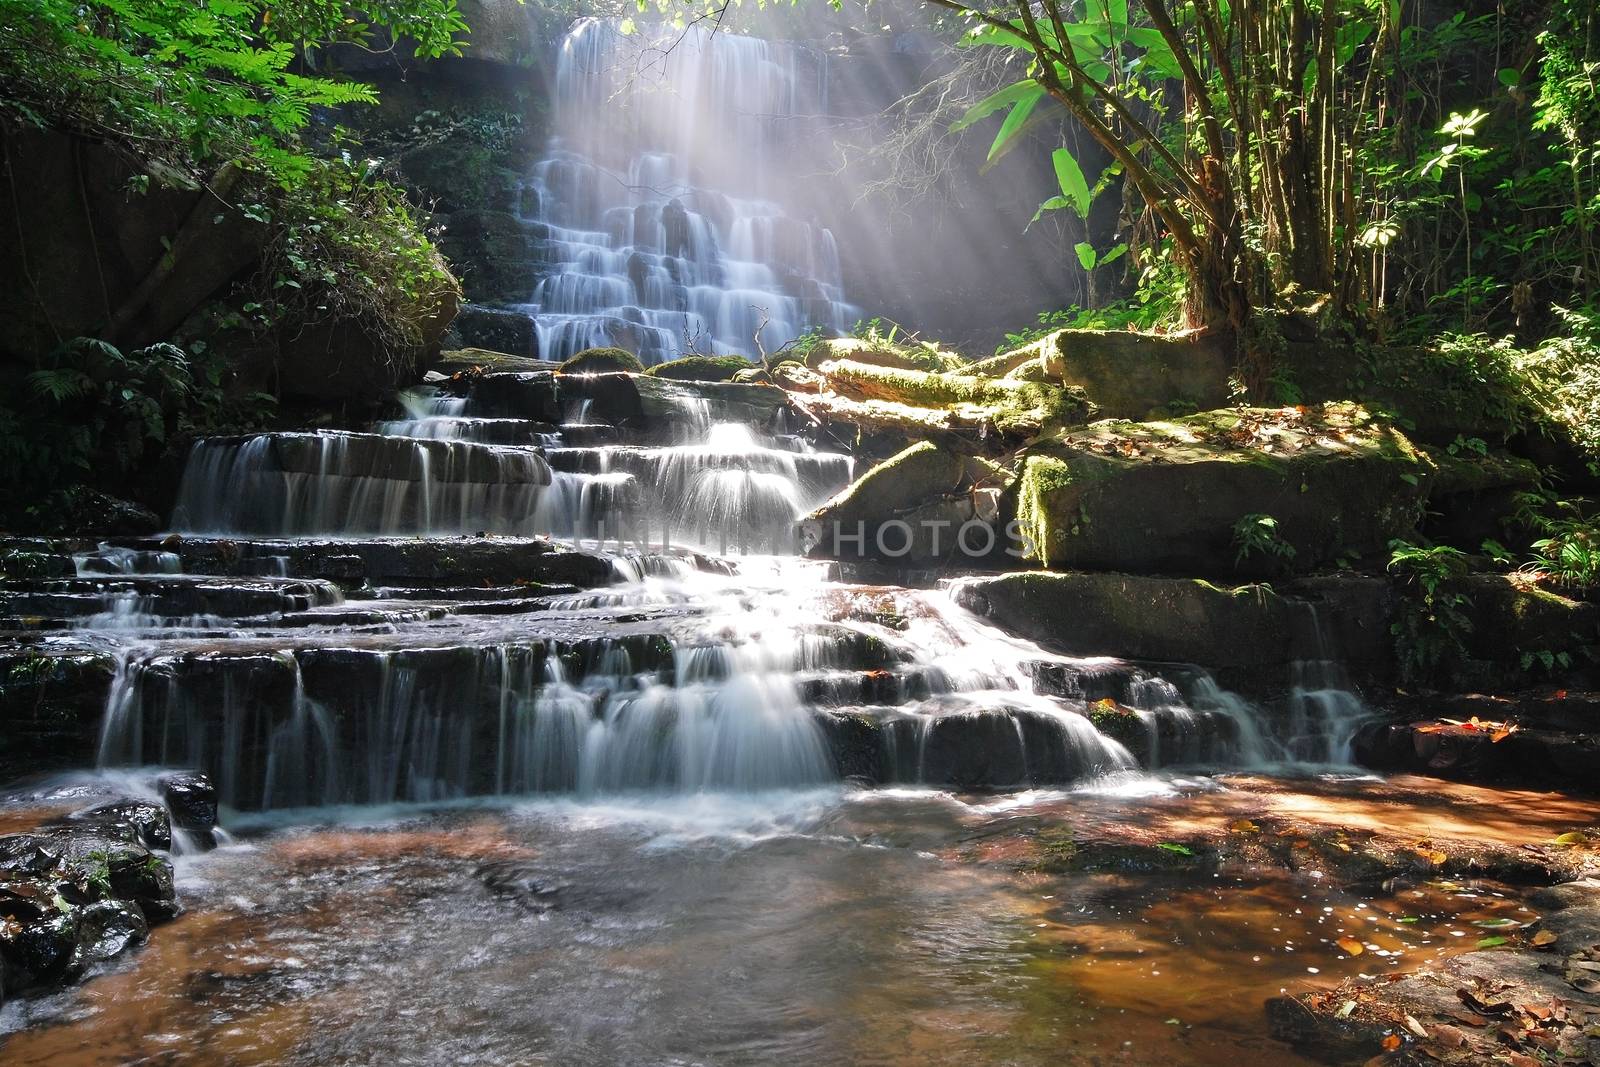 Waterfall in Thai National Park, Man Dang Waterfall, Phuhinrongkla National Park, Petchaboon Province, Thailand, in summer season